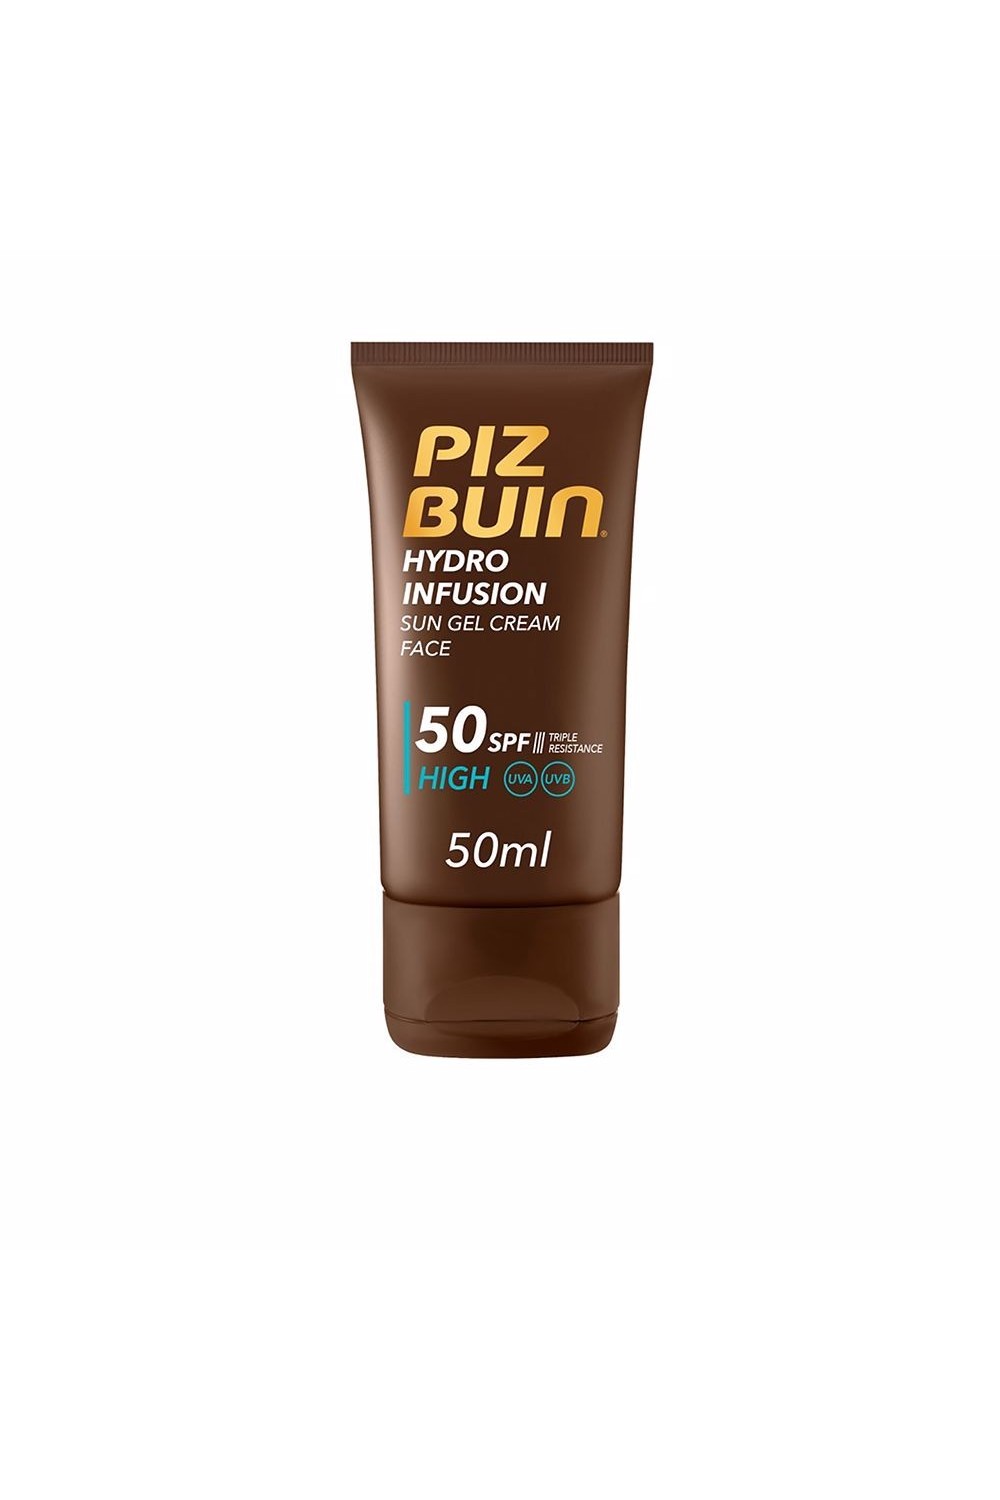 Piz Buin Hydro Infusion Sun Gel Cream Face Spf50 50ml